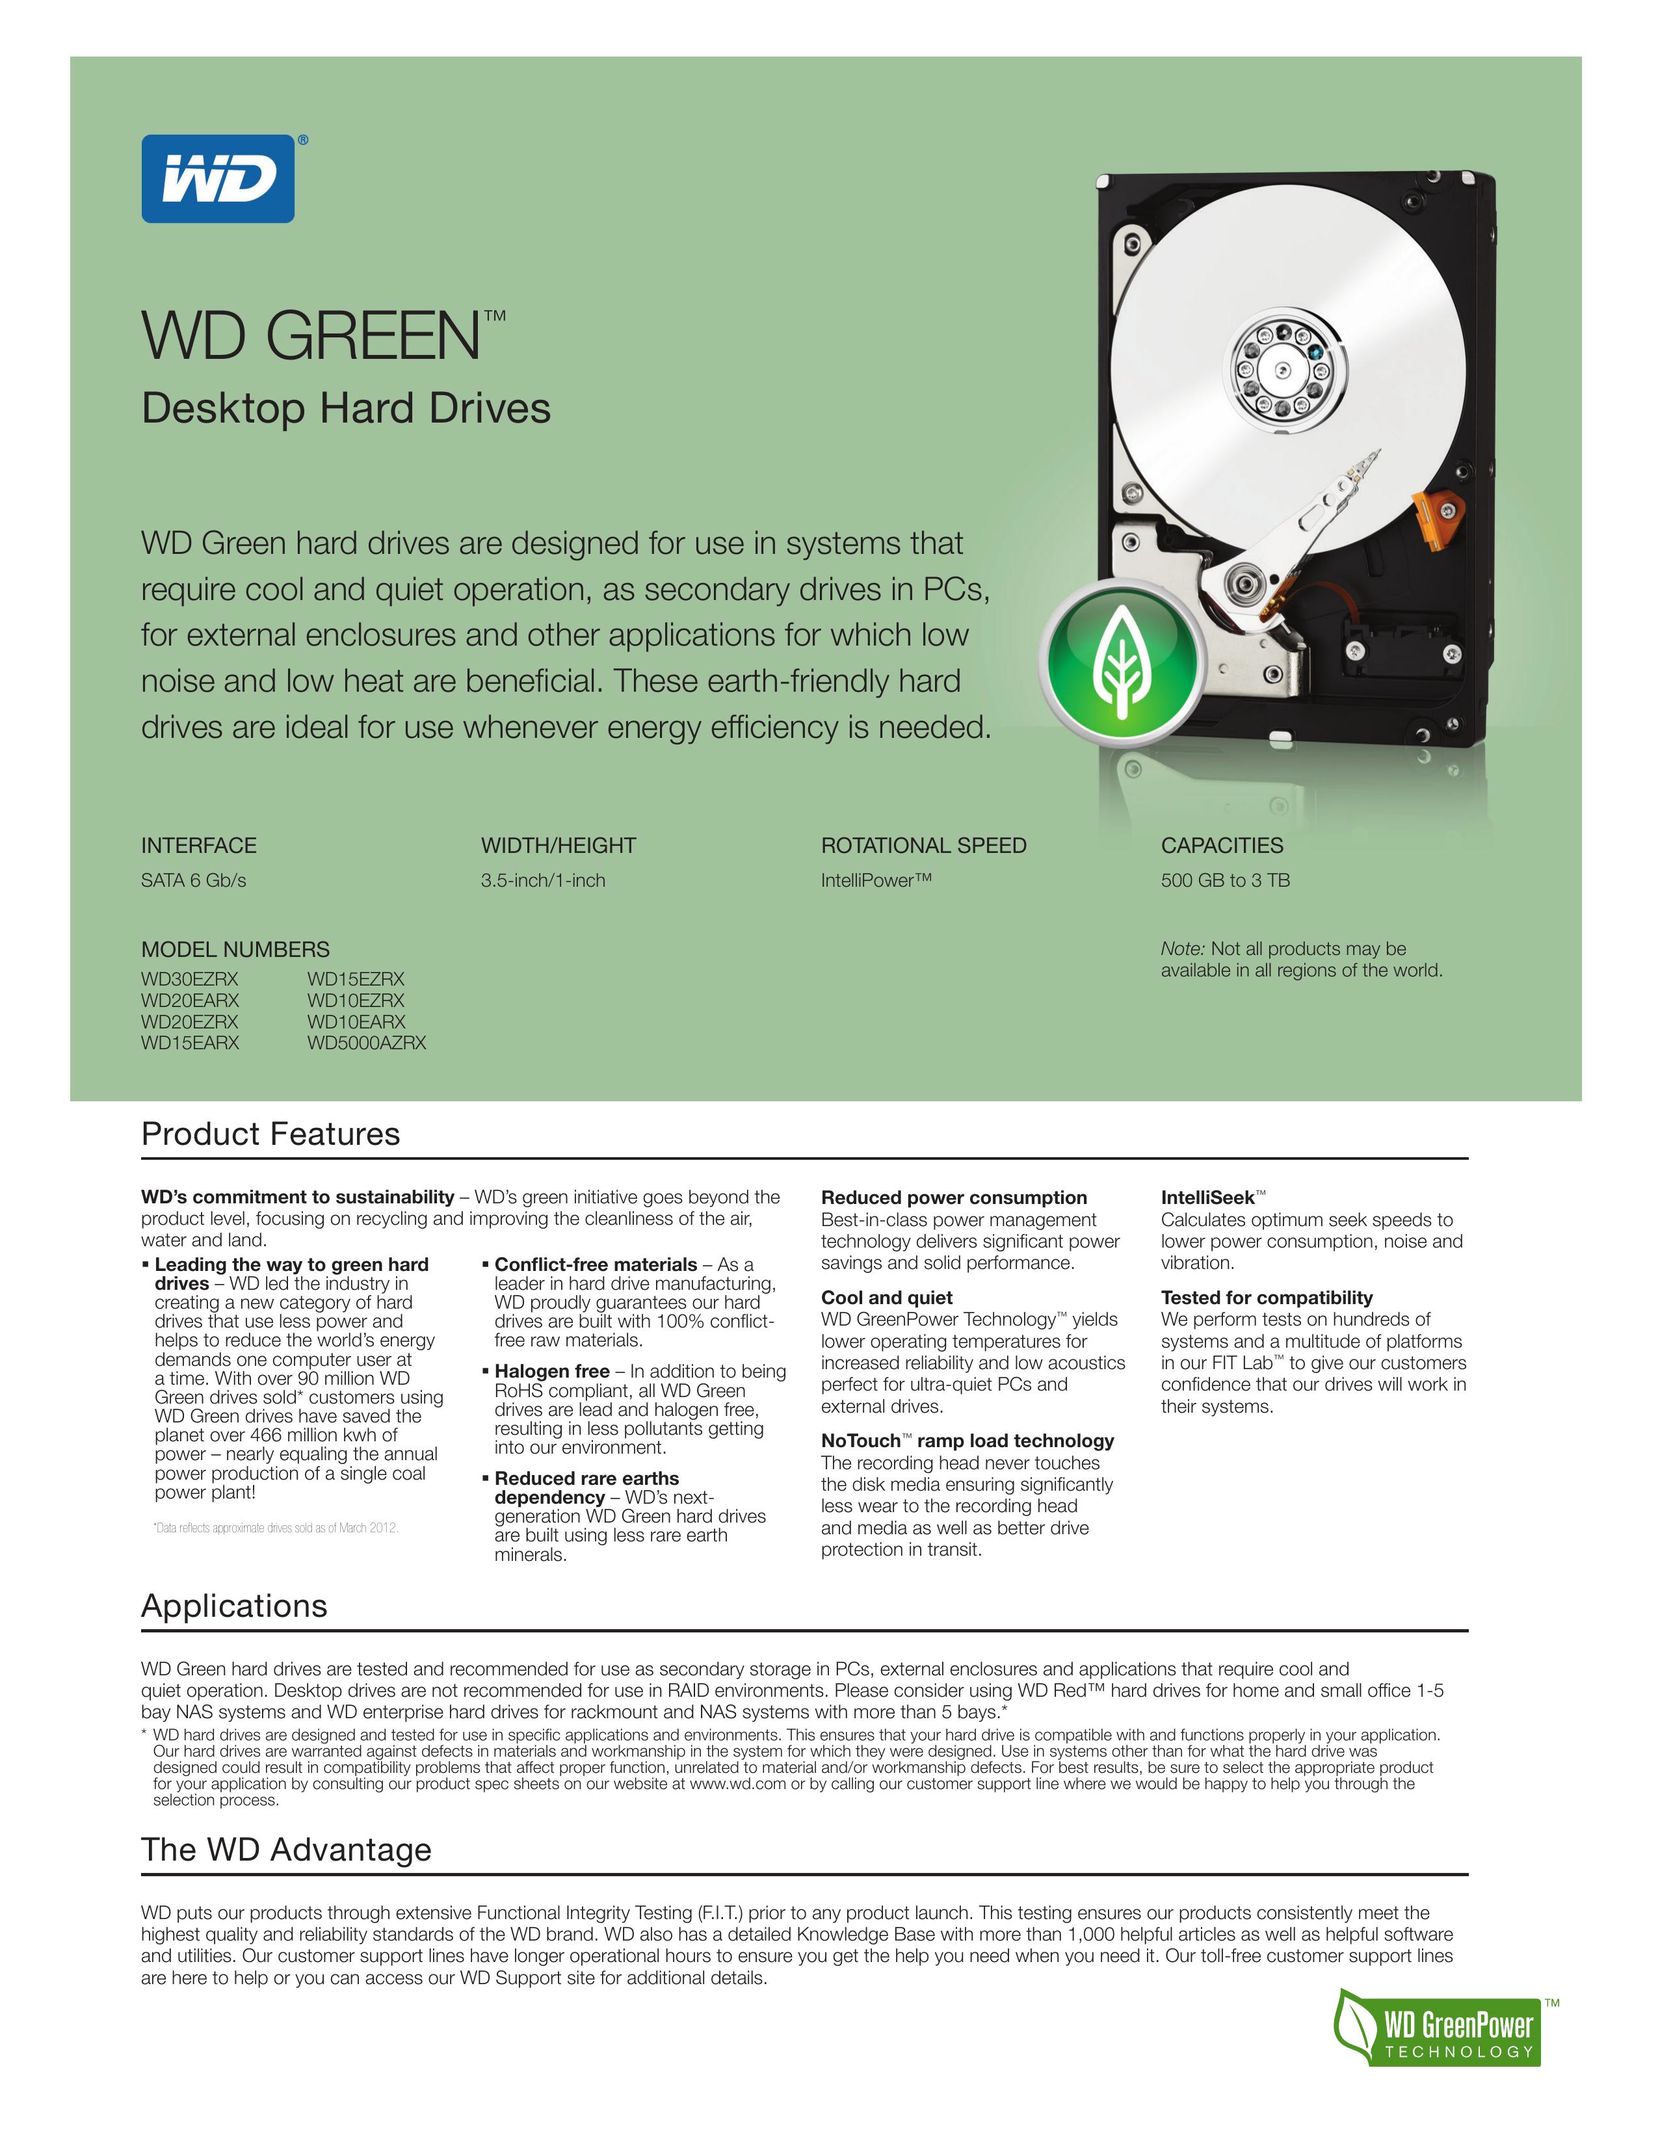 Western Digital WD10EZRX Computer Drive User Manual